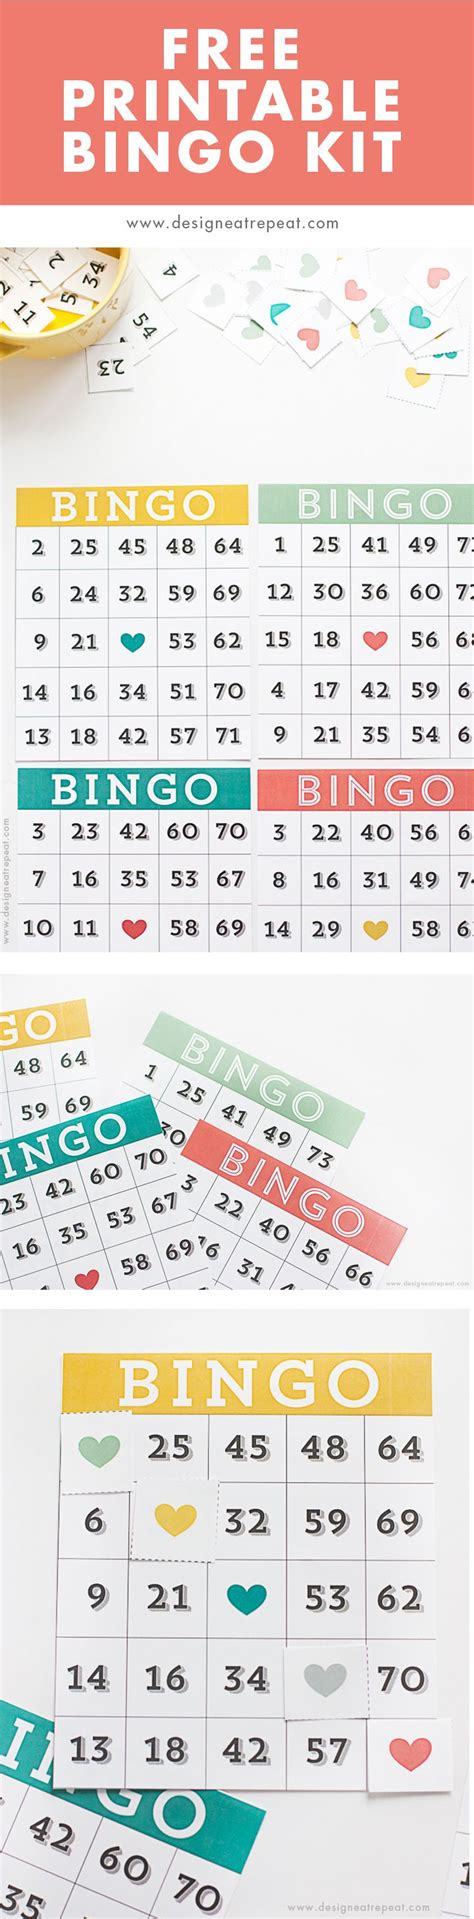 printable bingo cards ideas  pinterest  printable